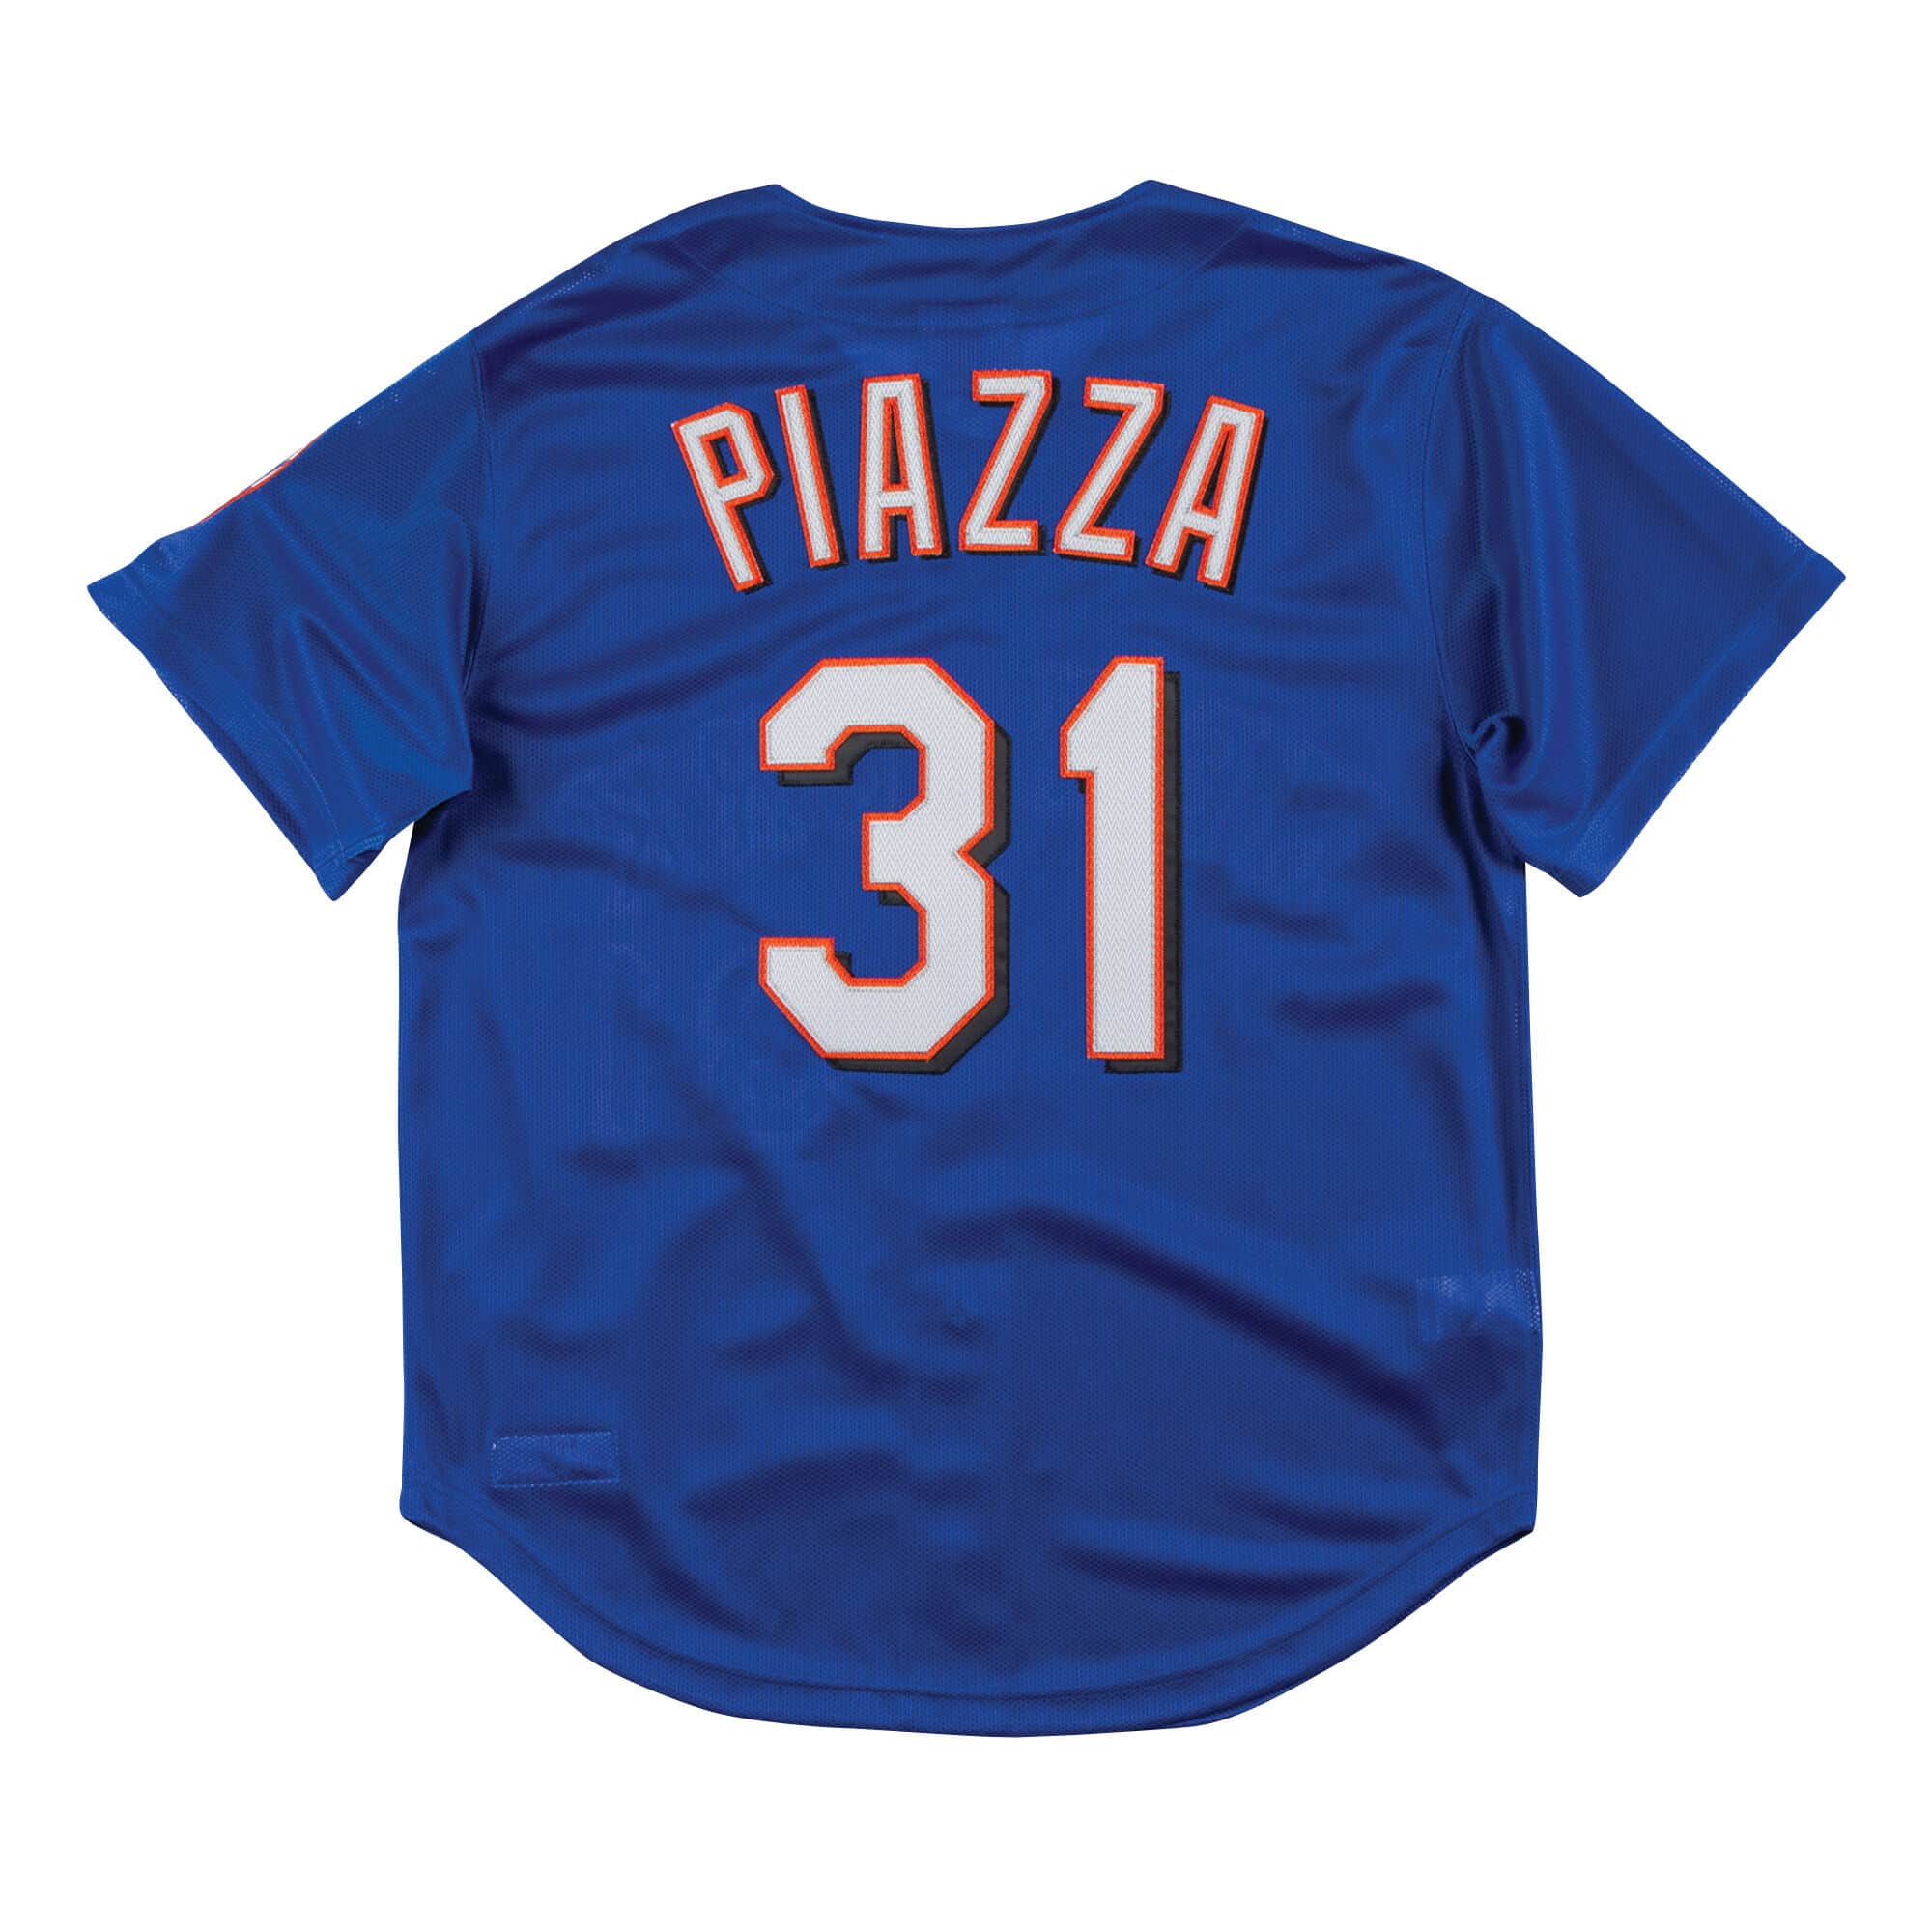 Throwback Mike Piazza New York METS #31 Black Mens XL Baseball Jersey